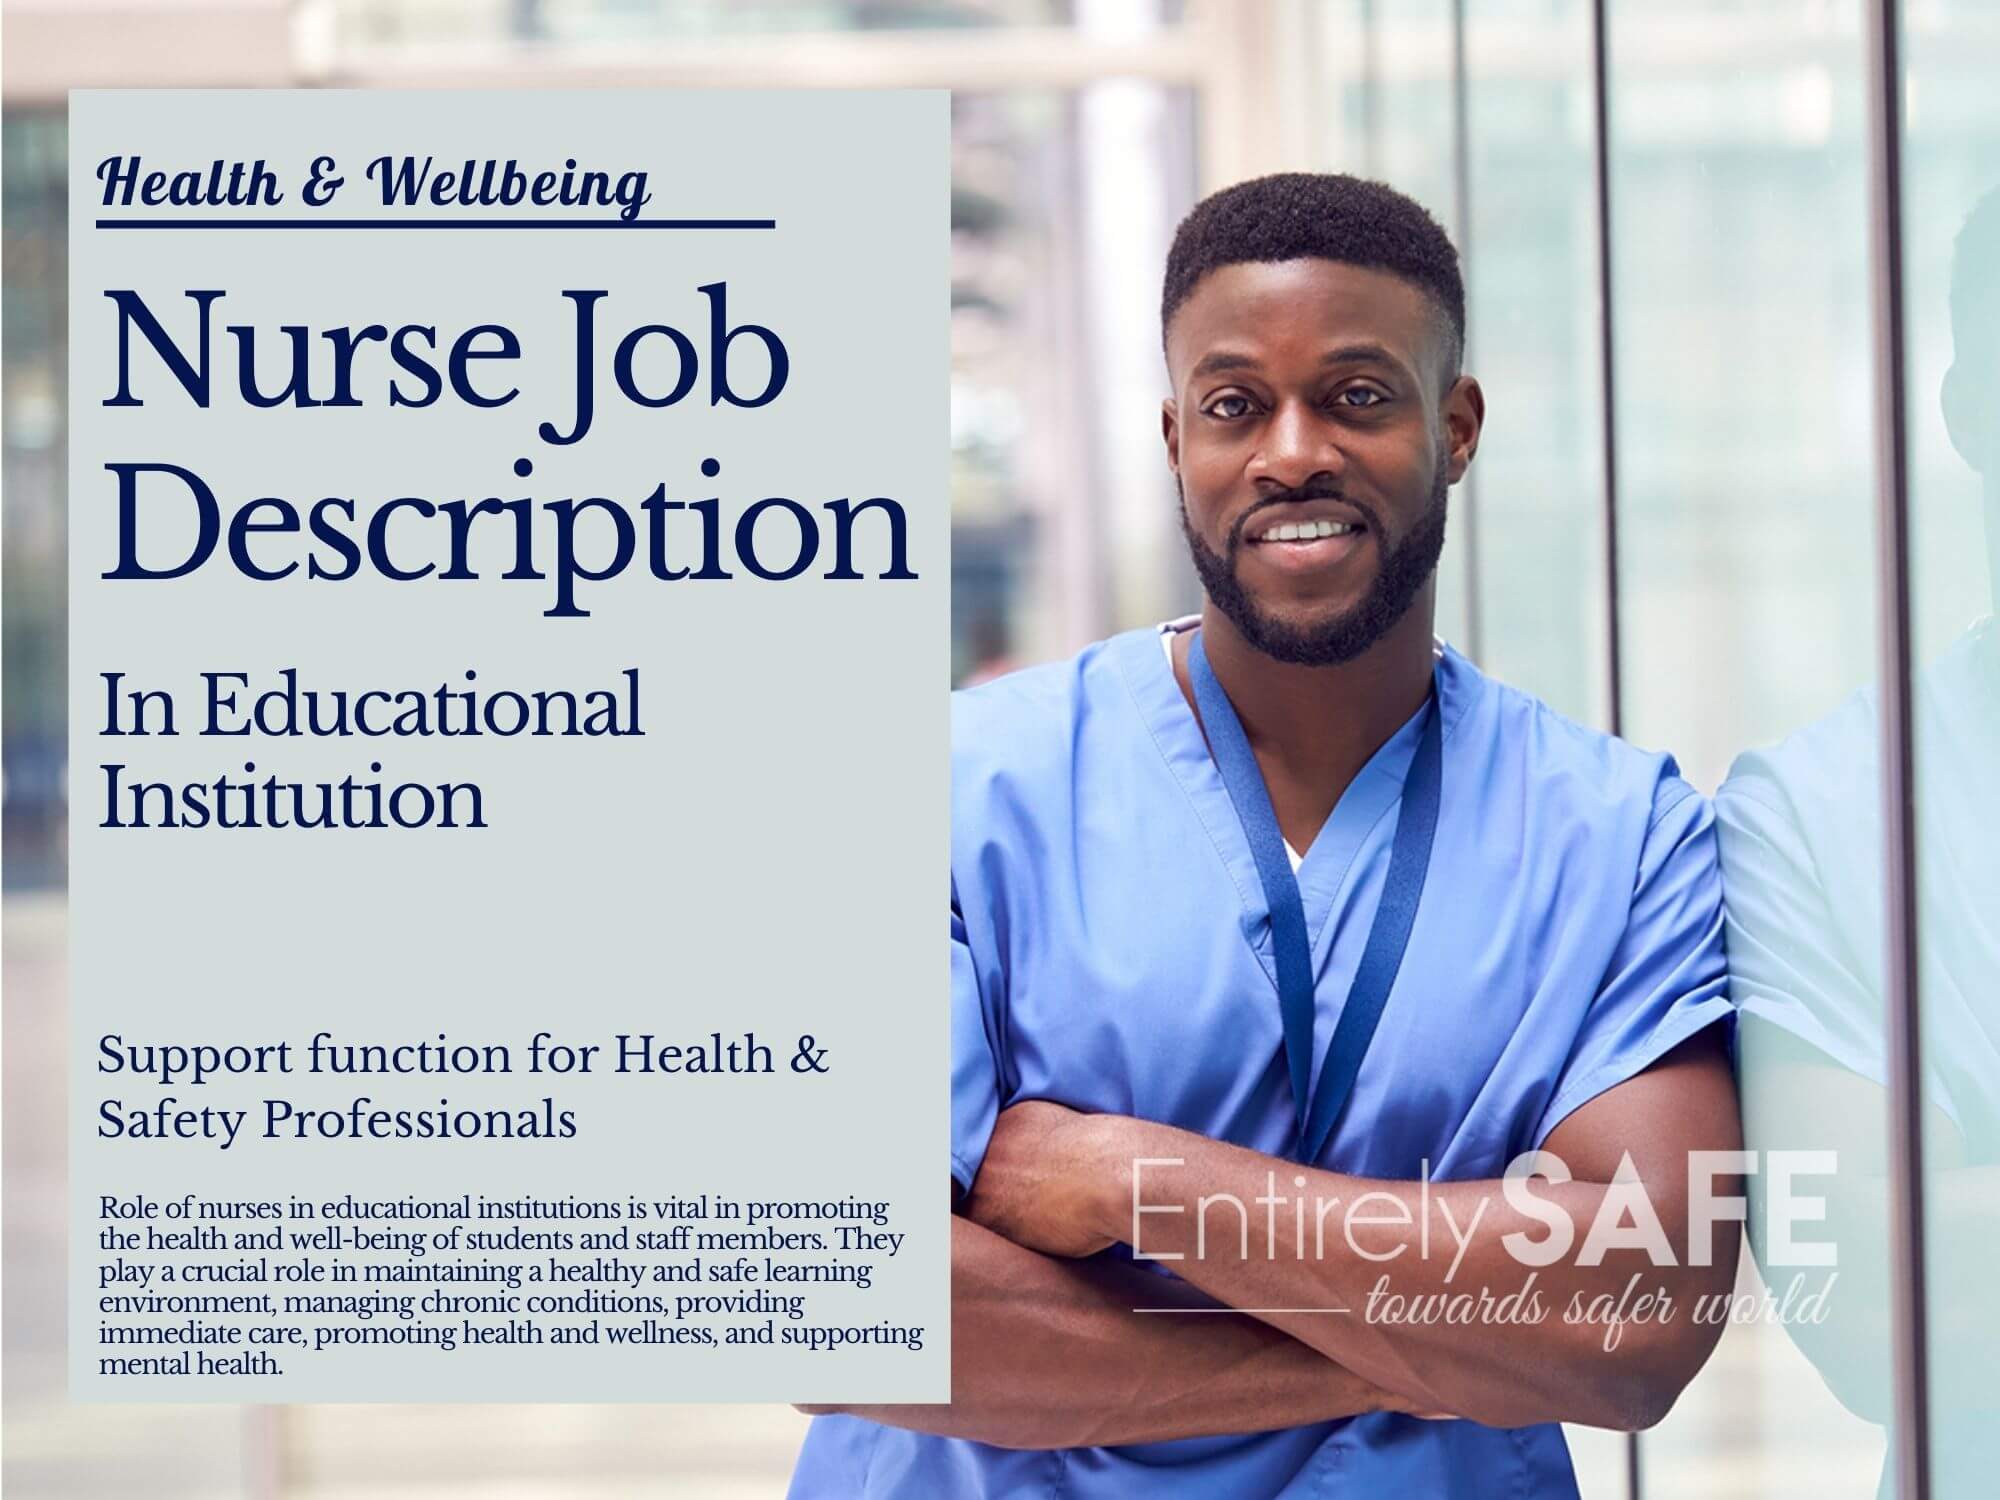 Nurse Job Description in Educational Institution